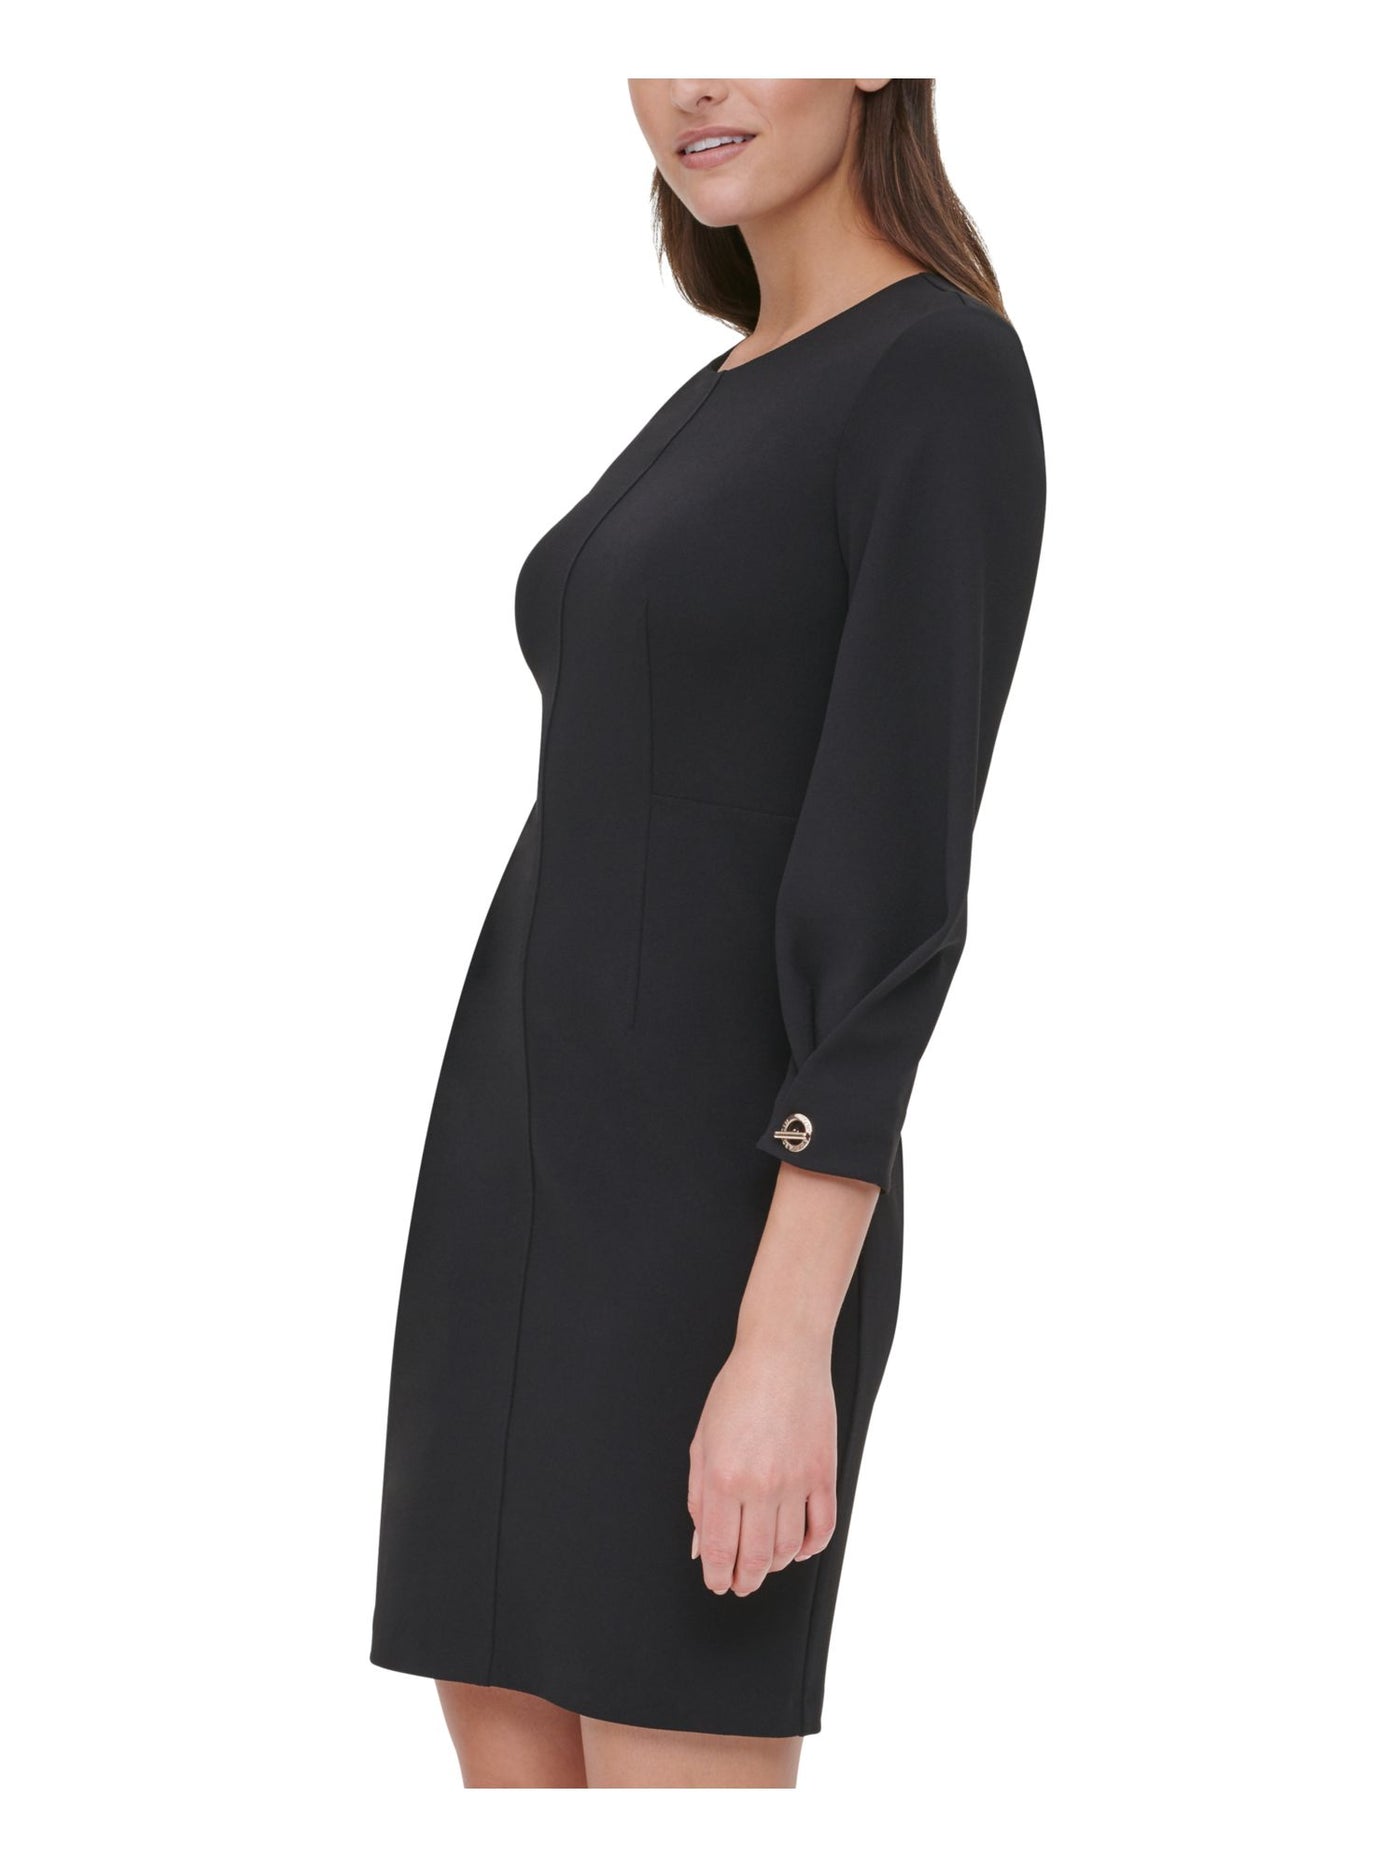 TOMMY HILFIGER Womens Black Long Sleeve Jewel Neck Above The Knee Wear To Work Sheath Dress 10